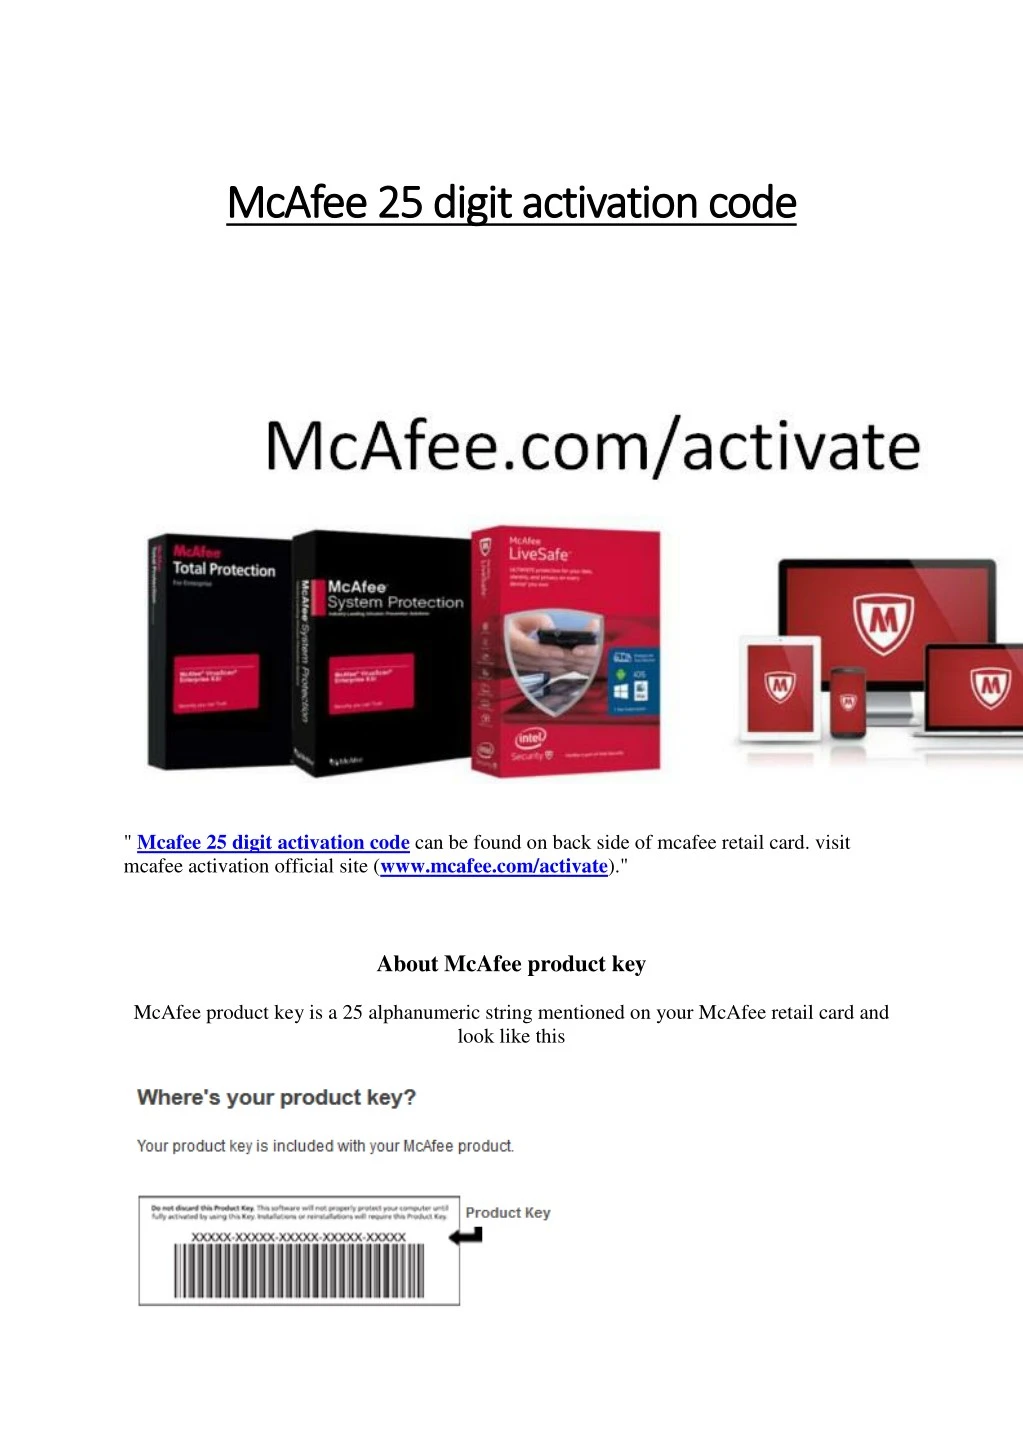 mca mcafee 25 digit activation code fee 25 digit